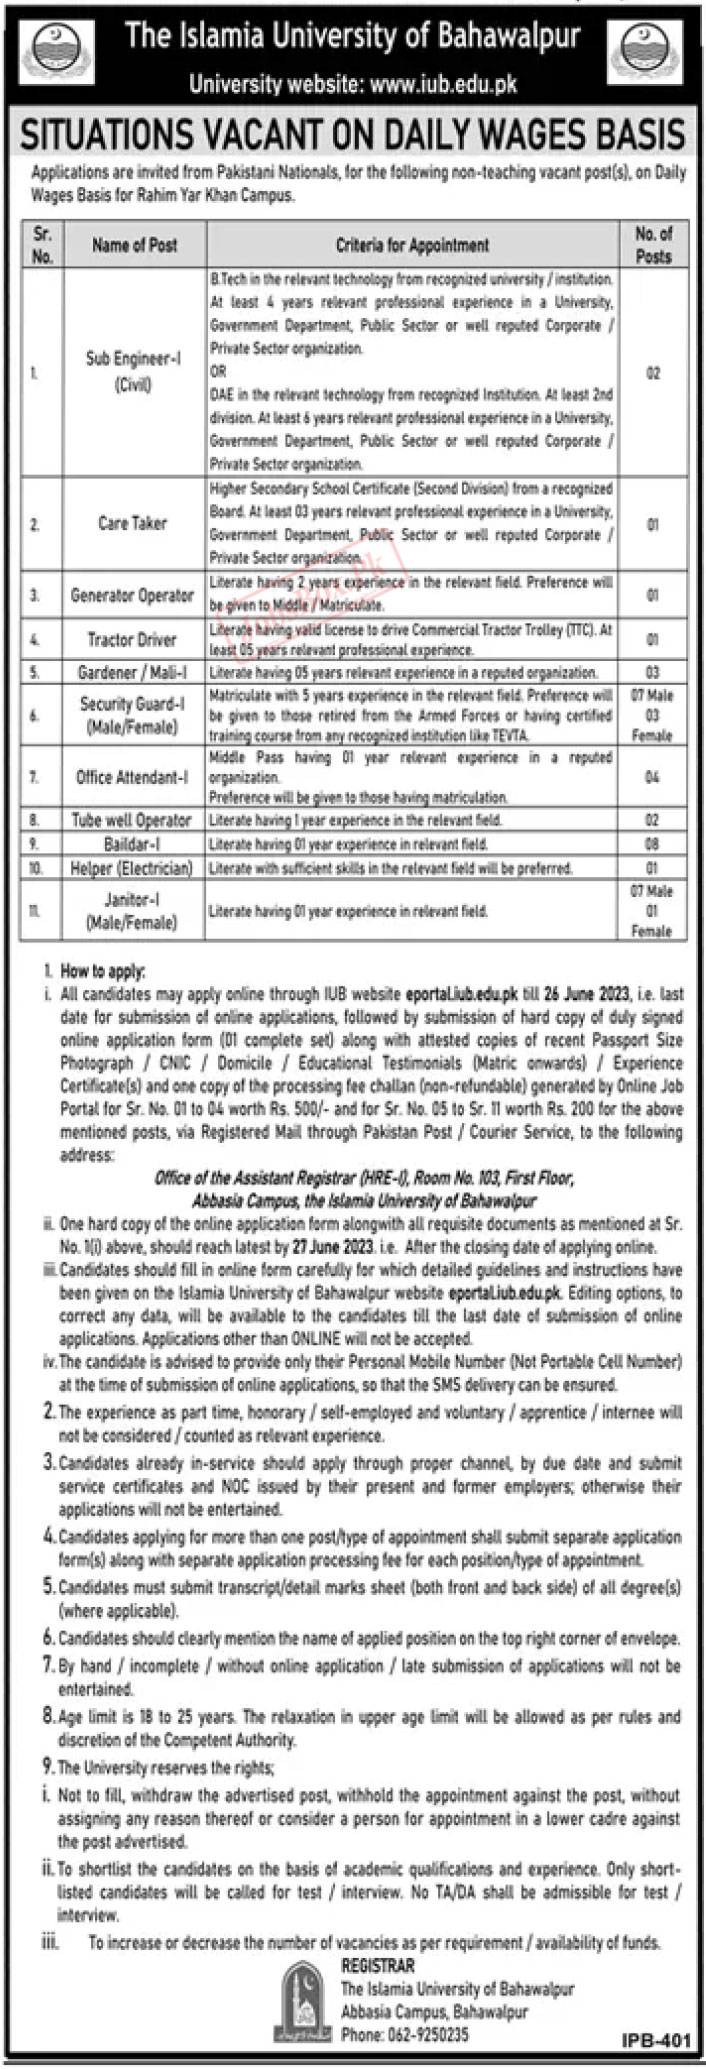 Islamia University of Bahawalpur IUB Jobs 2023 Apply at IUB Online Job Portal